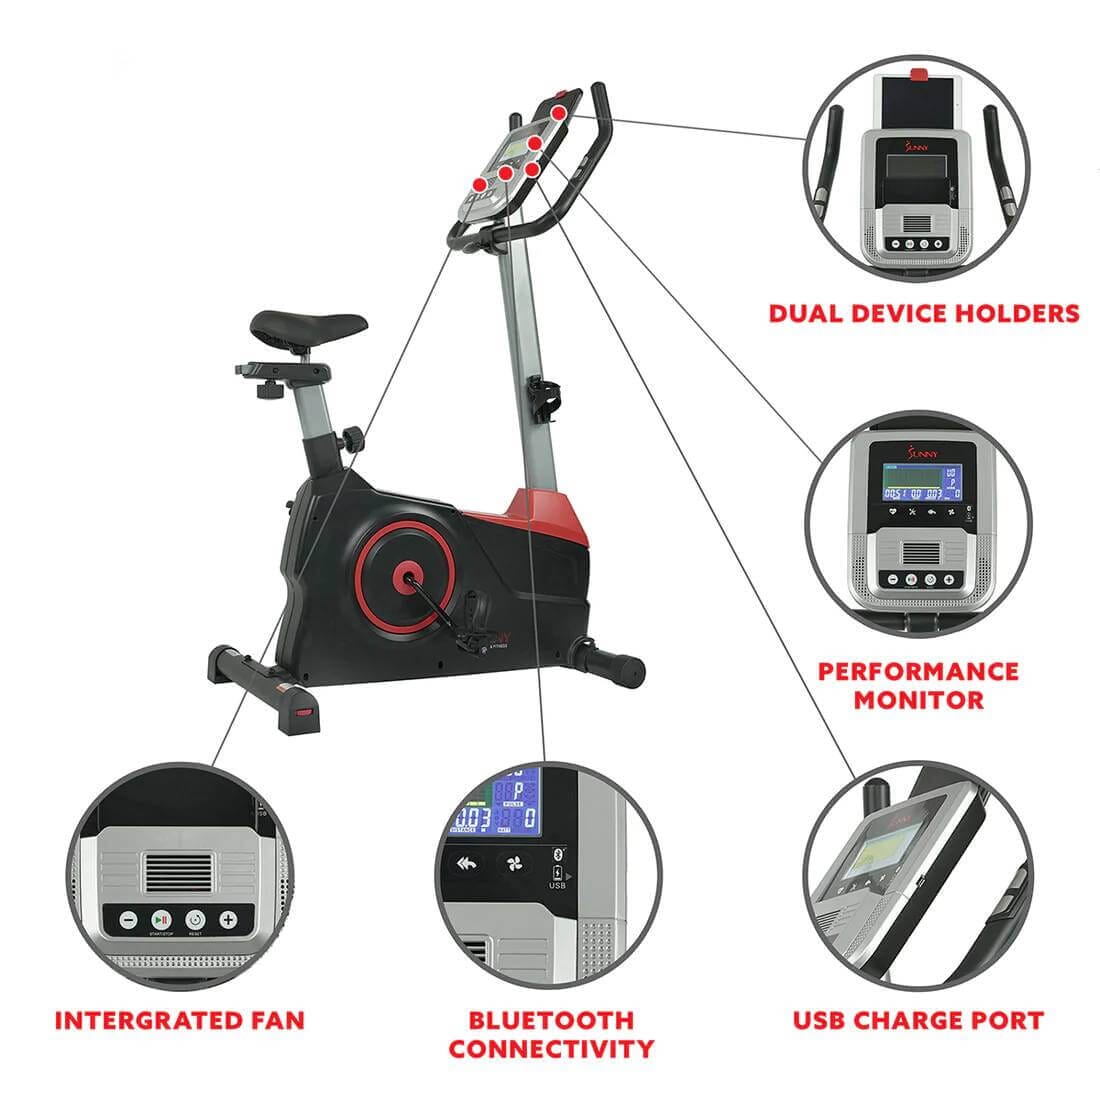 Sunny Health Fitness Evo-Fit Upright Exercise Bike-Advanced Cardio Machine - Multi-Color-Compact